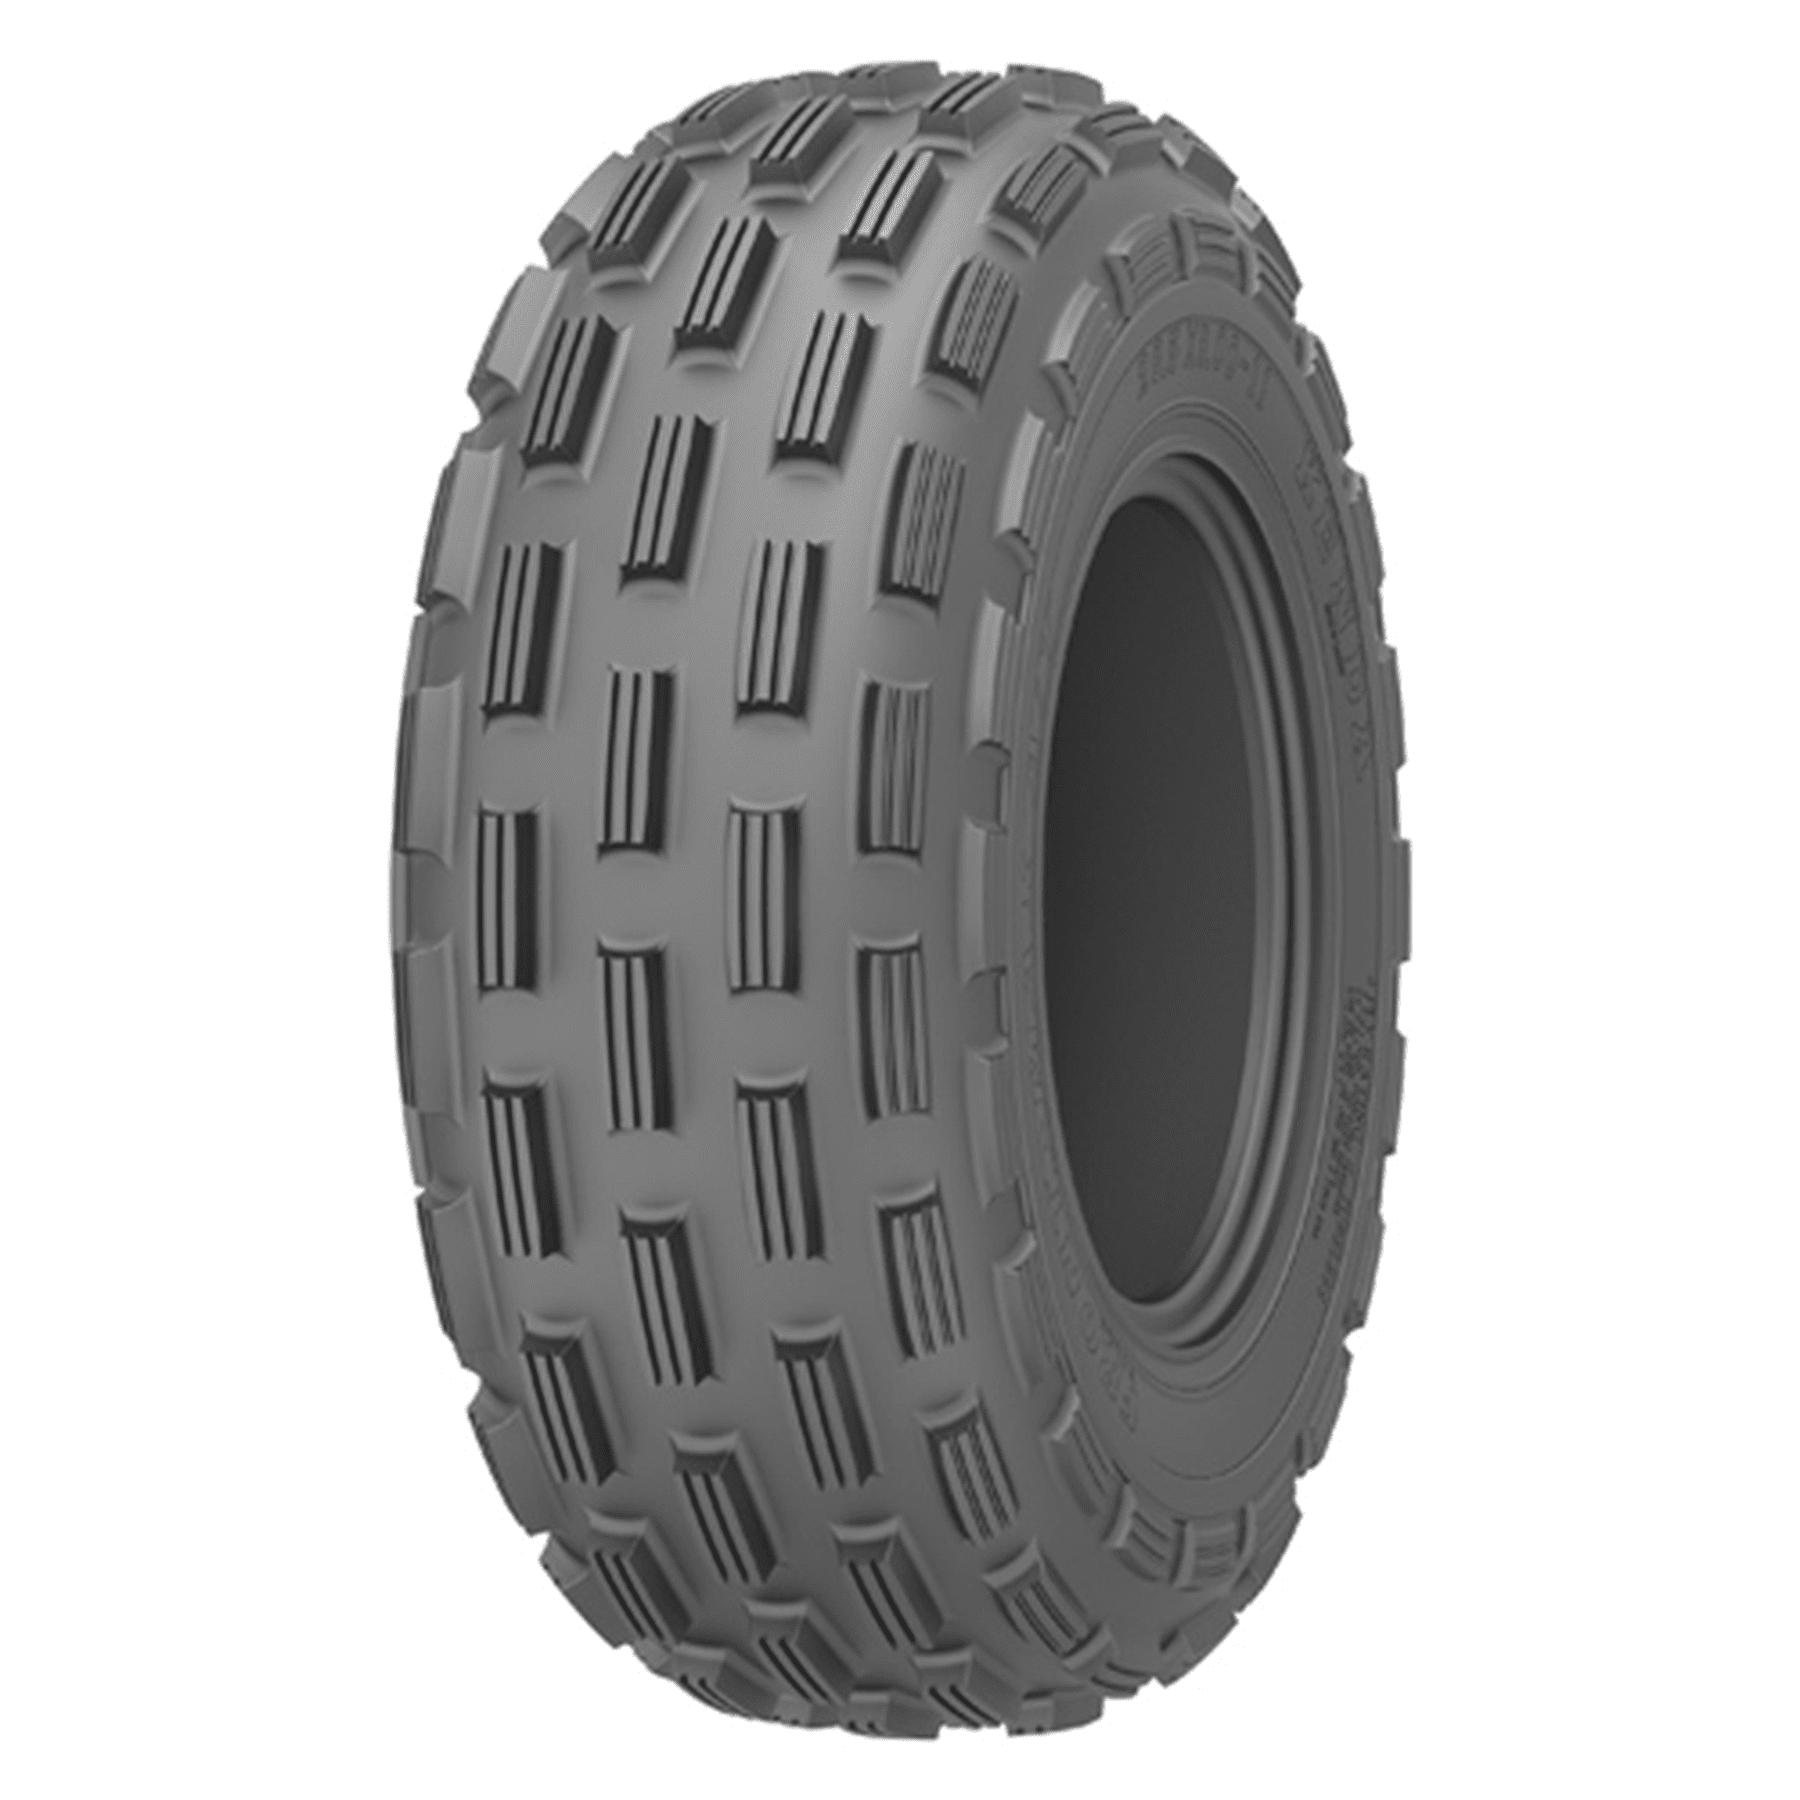 Kenda Front Max 23.5x8-11 ATV Tire 23.5x8x11 K284 23.5-8-11